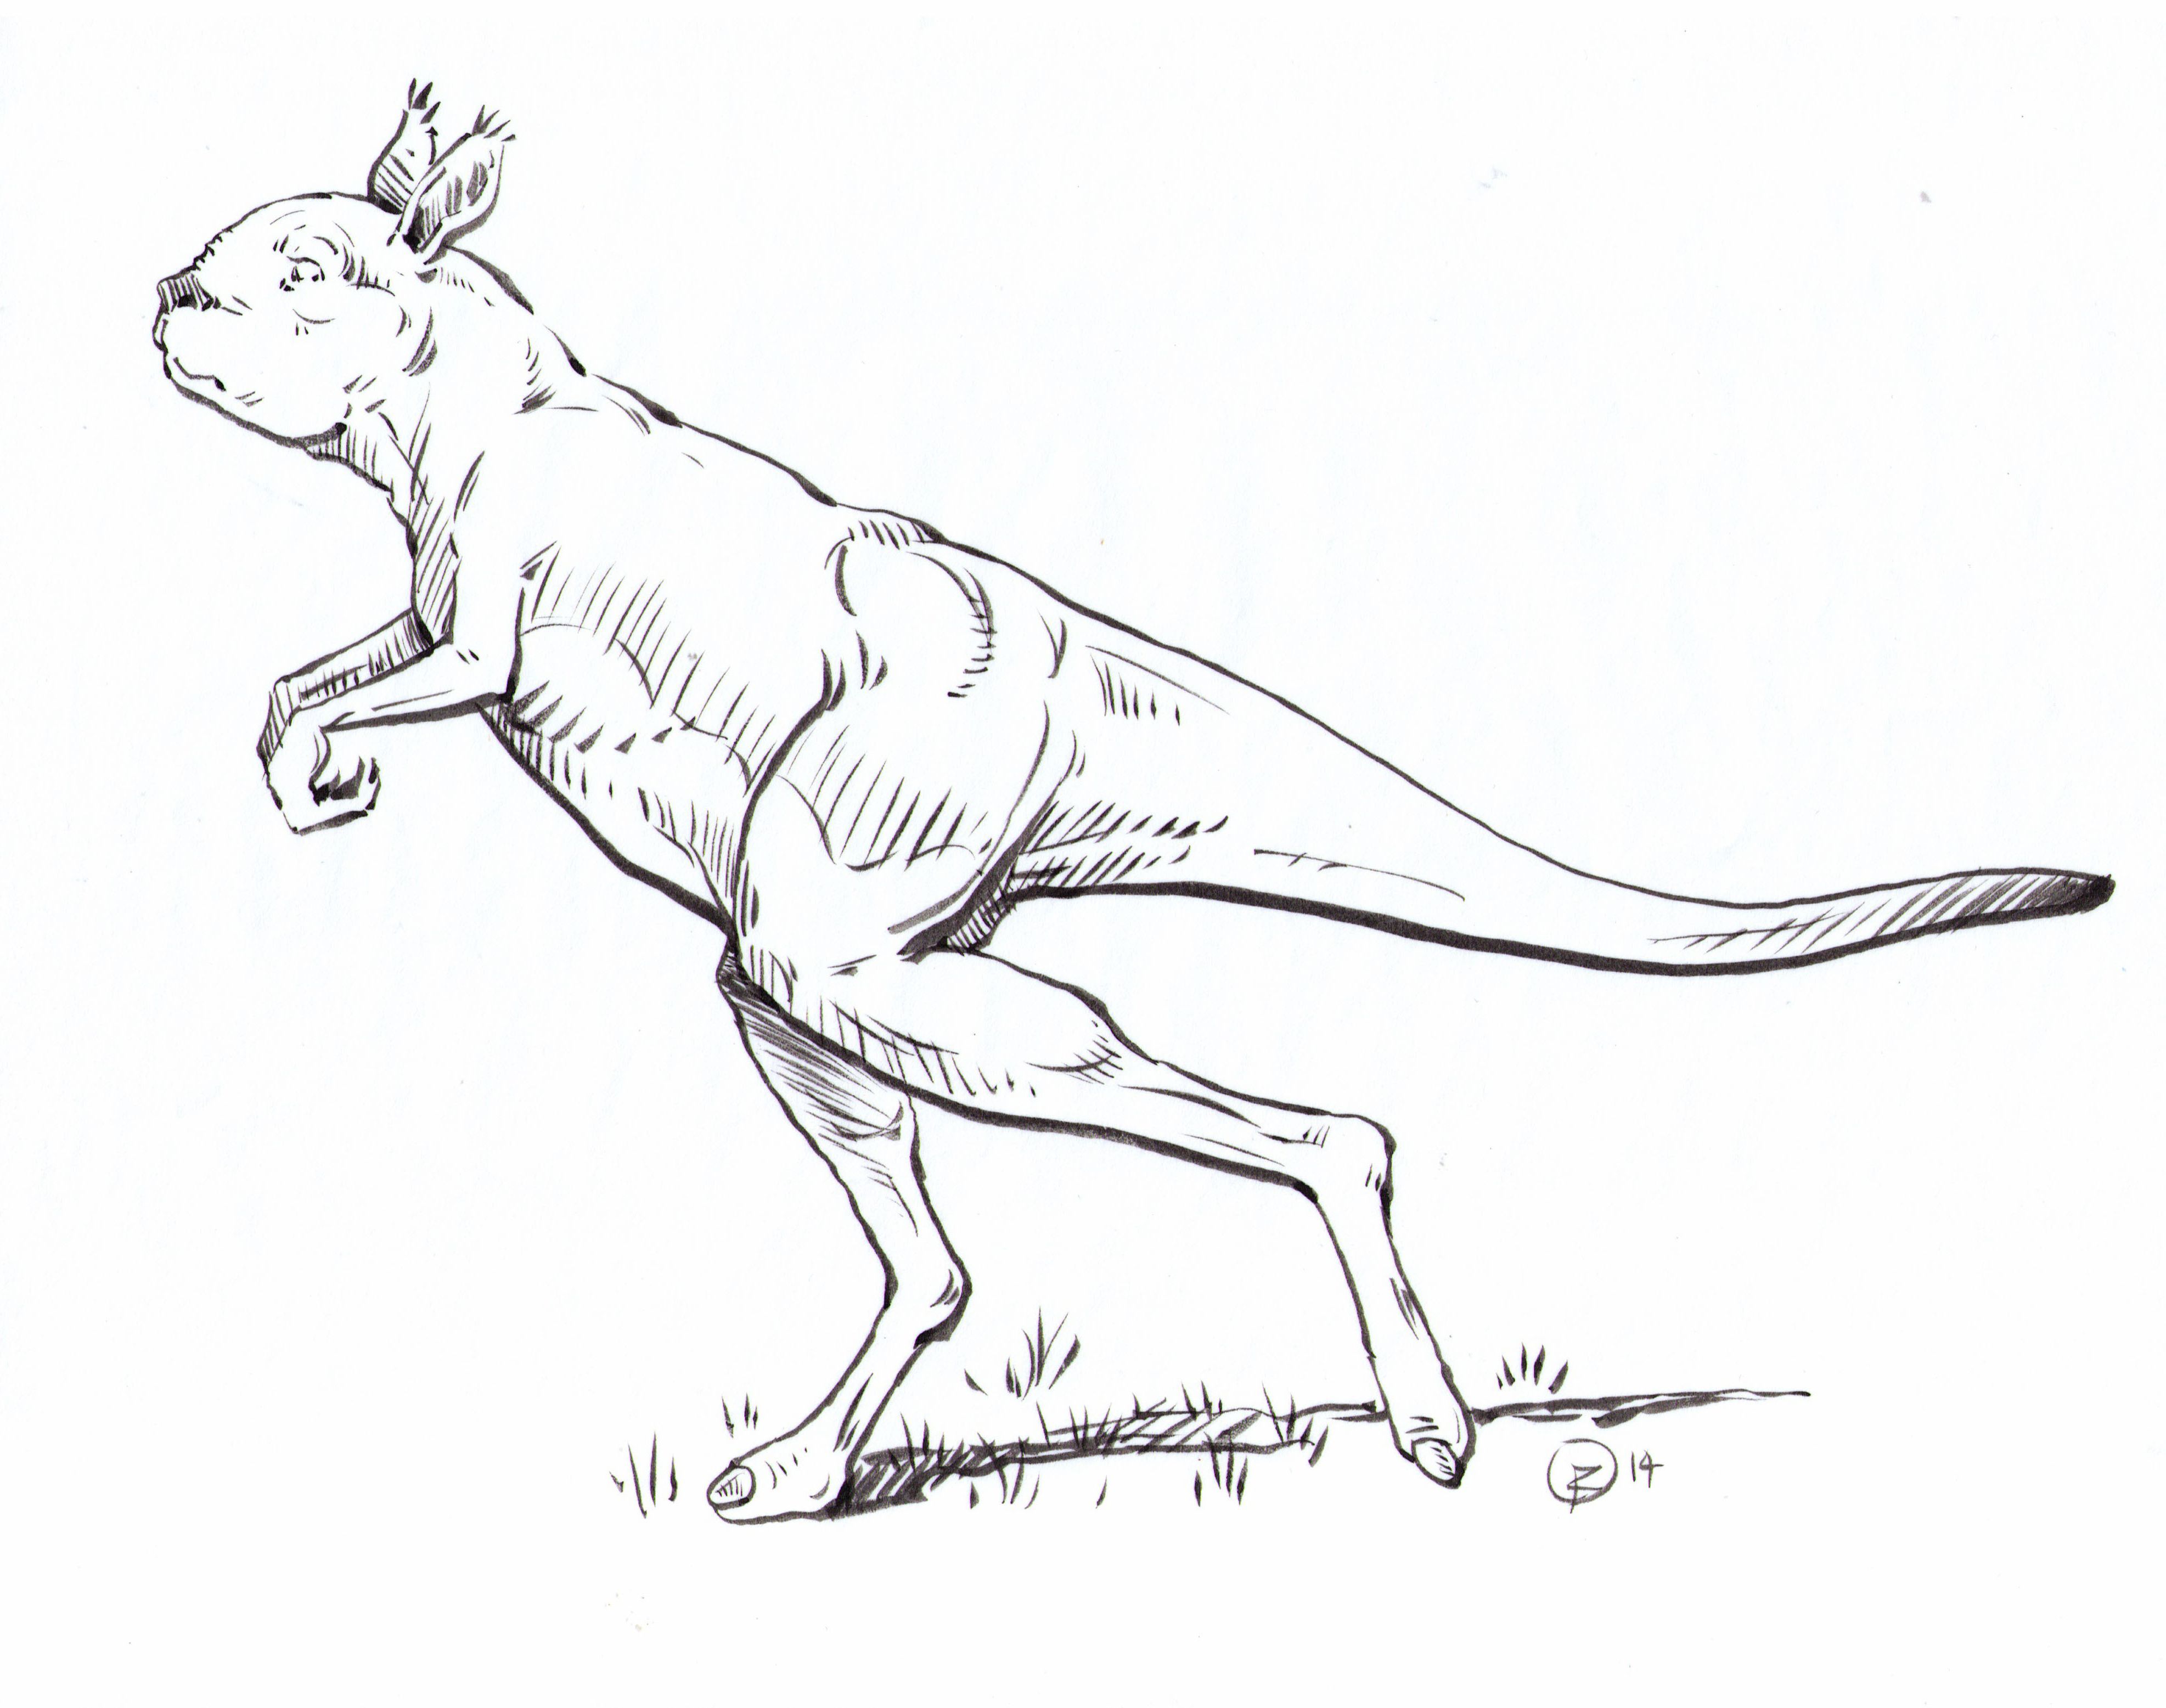 image-of-the-vintage-kangaroo